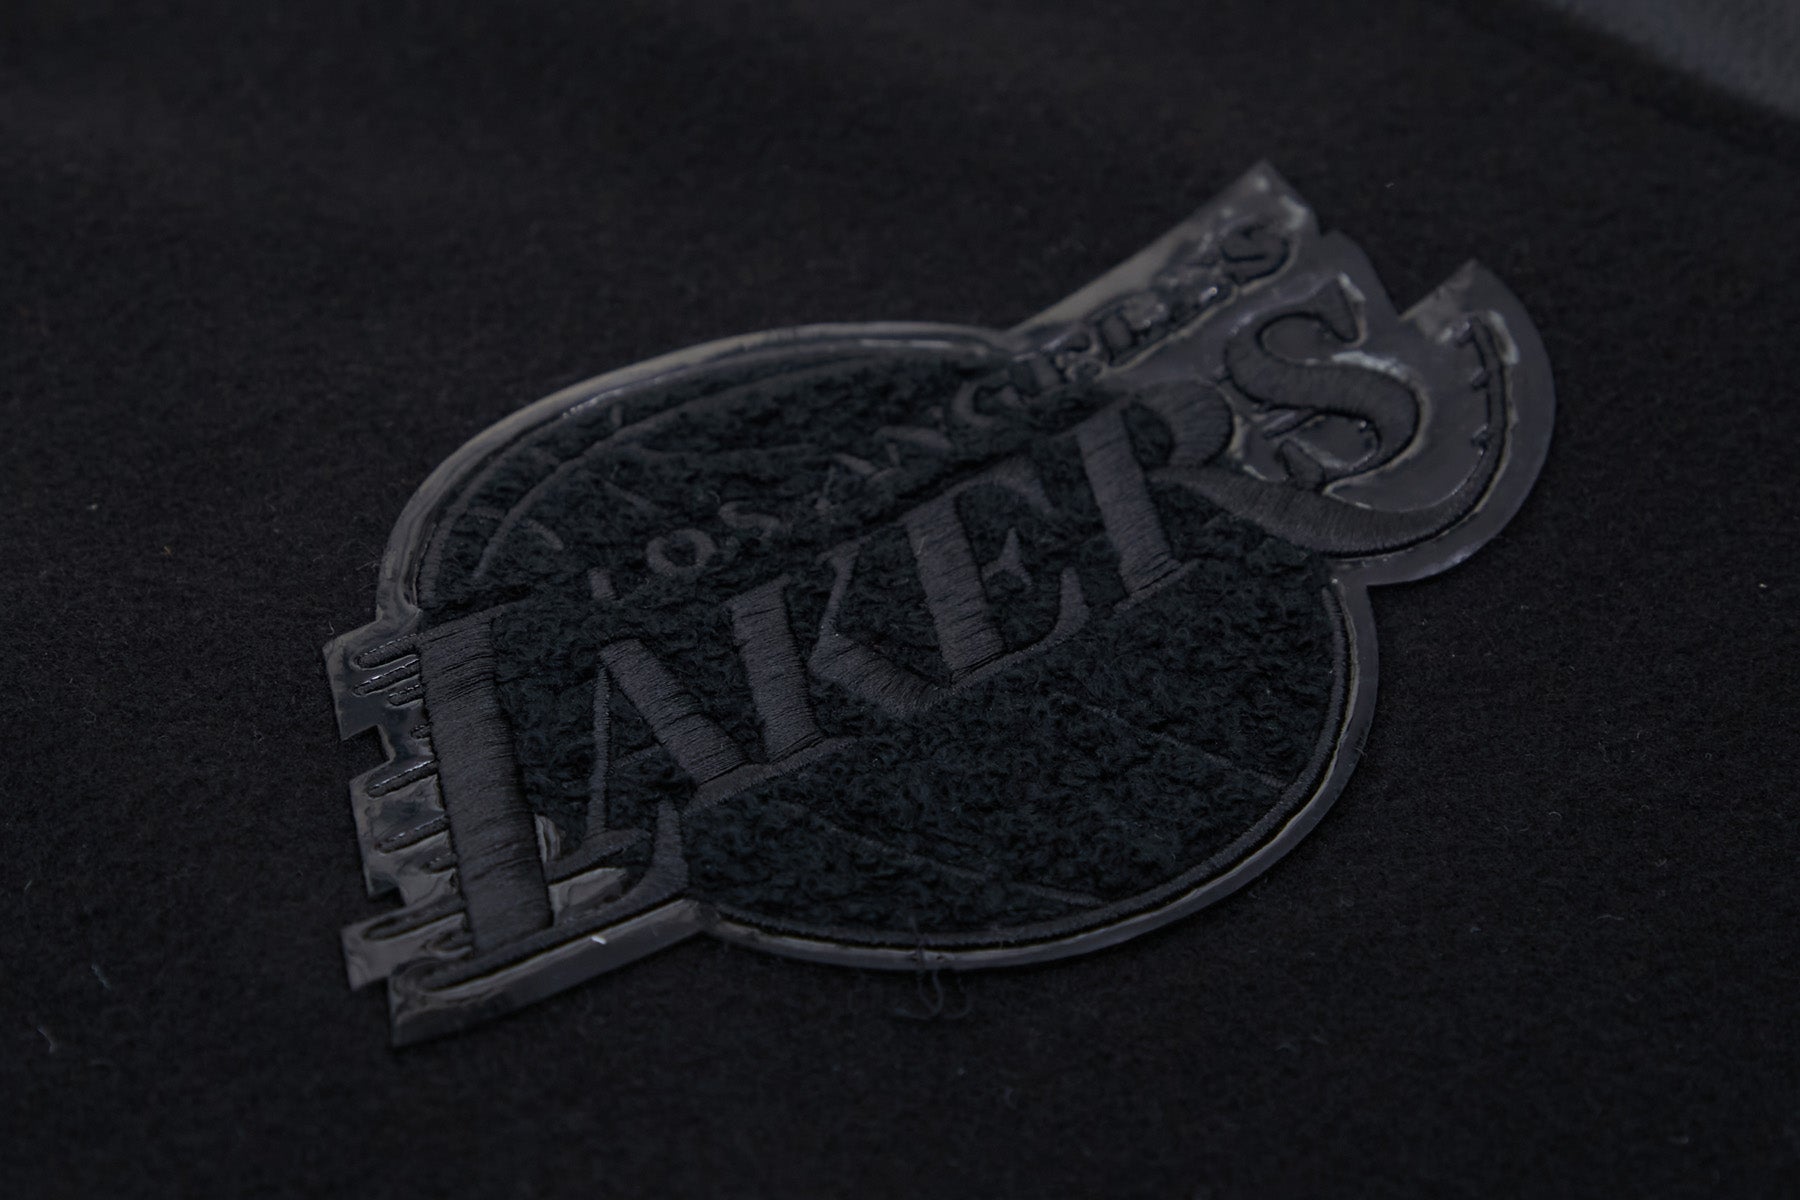 Pro Standard Men's Black Los Angeles Lakers Remix Varsity Full-Zip Jacket -  Macy's